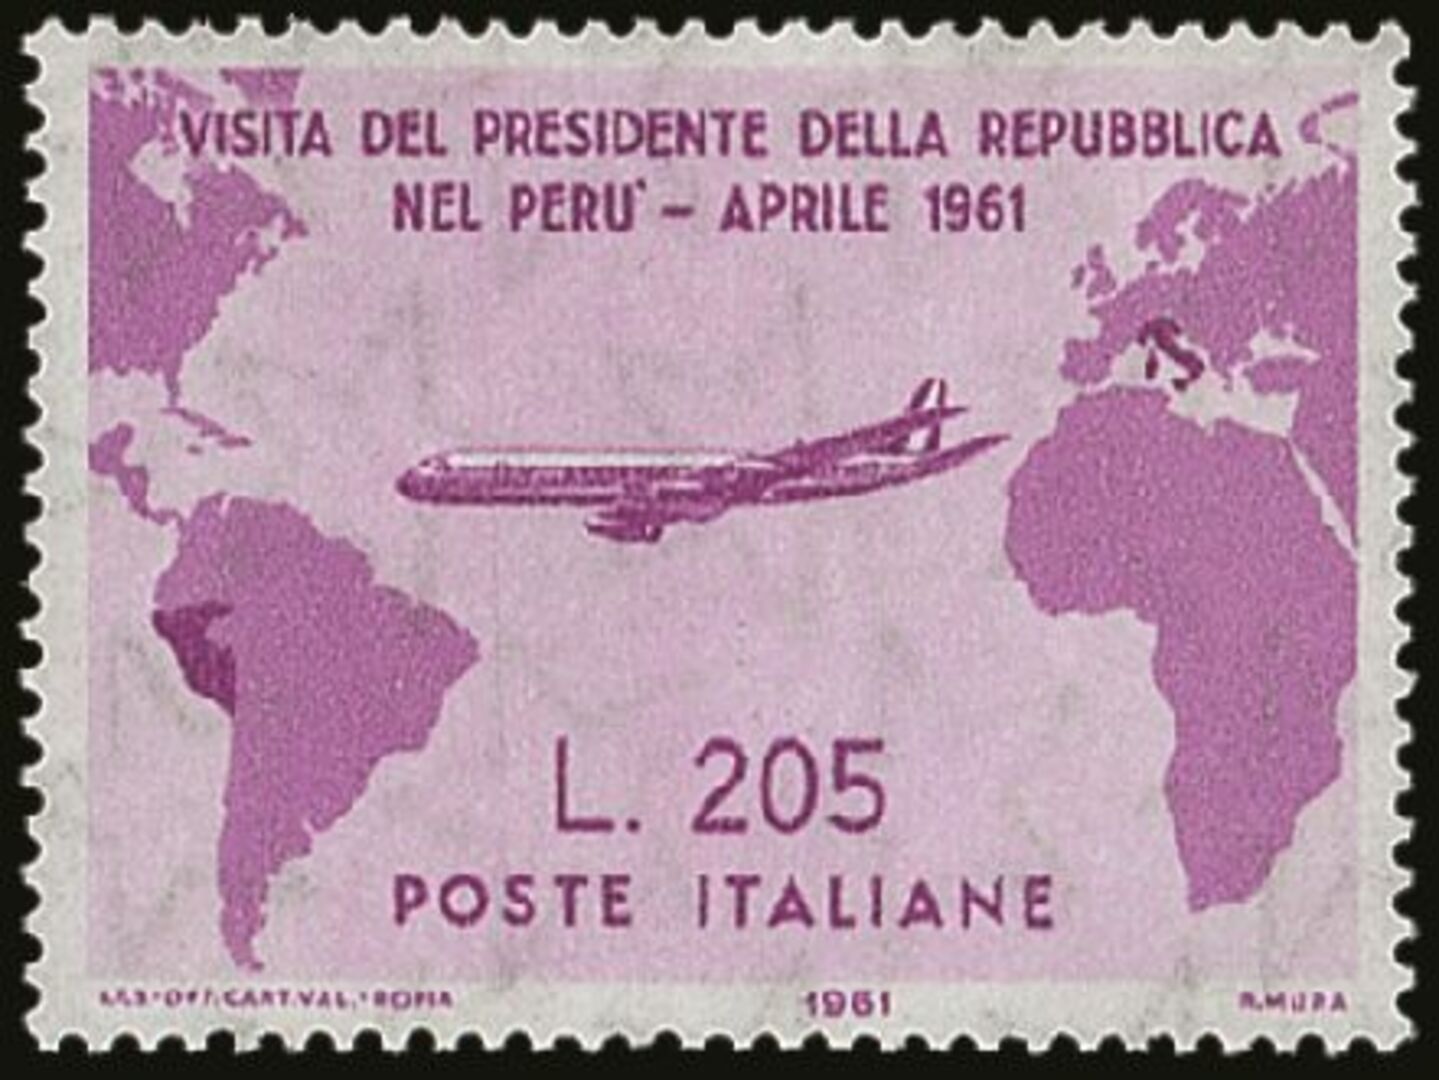 The Illusive Gronchi Rosa stamp